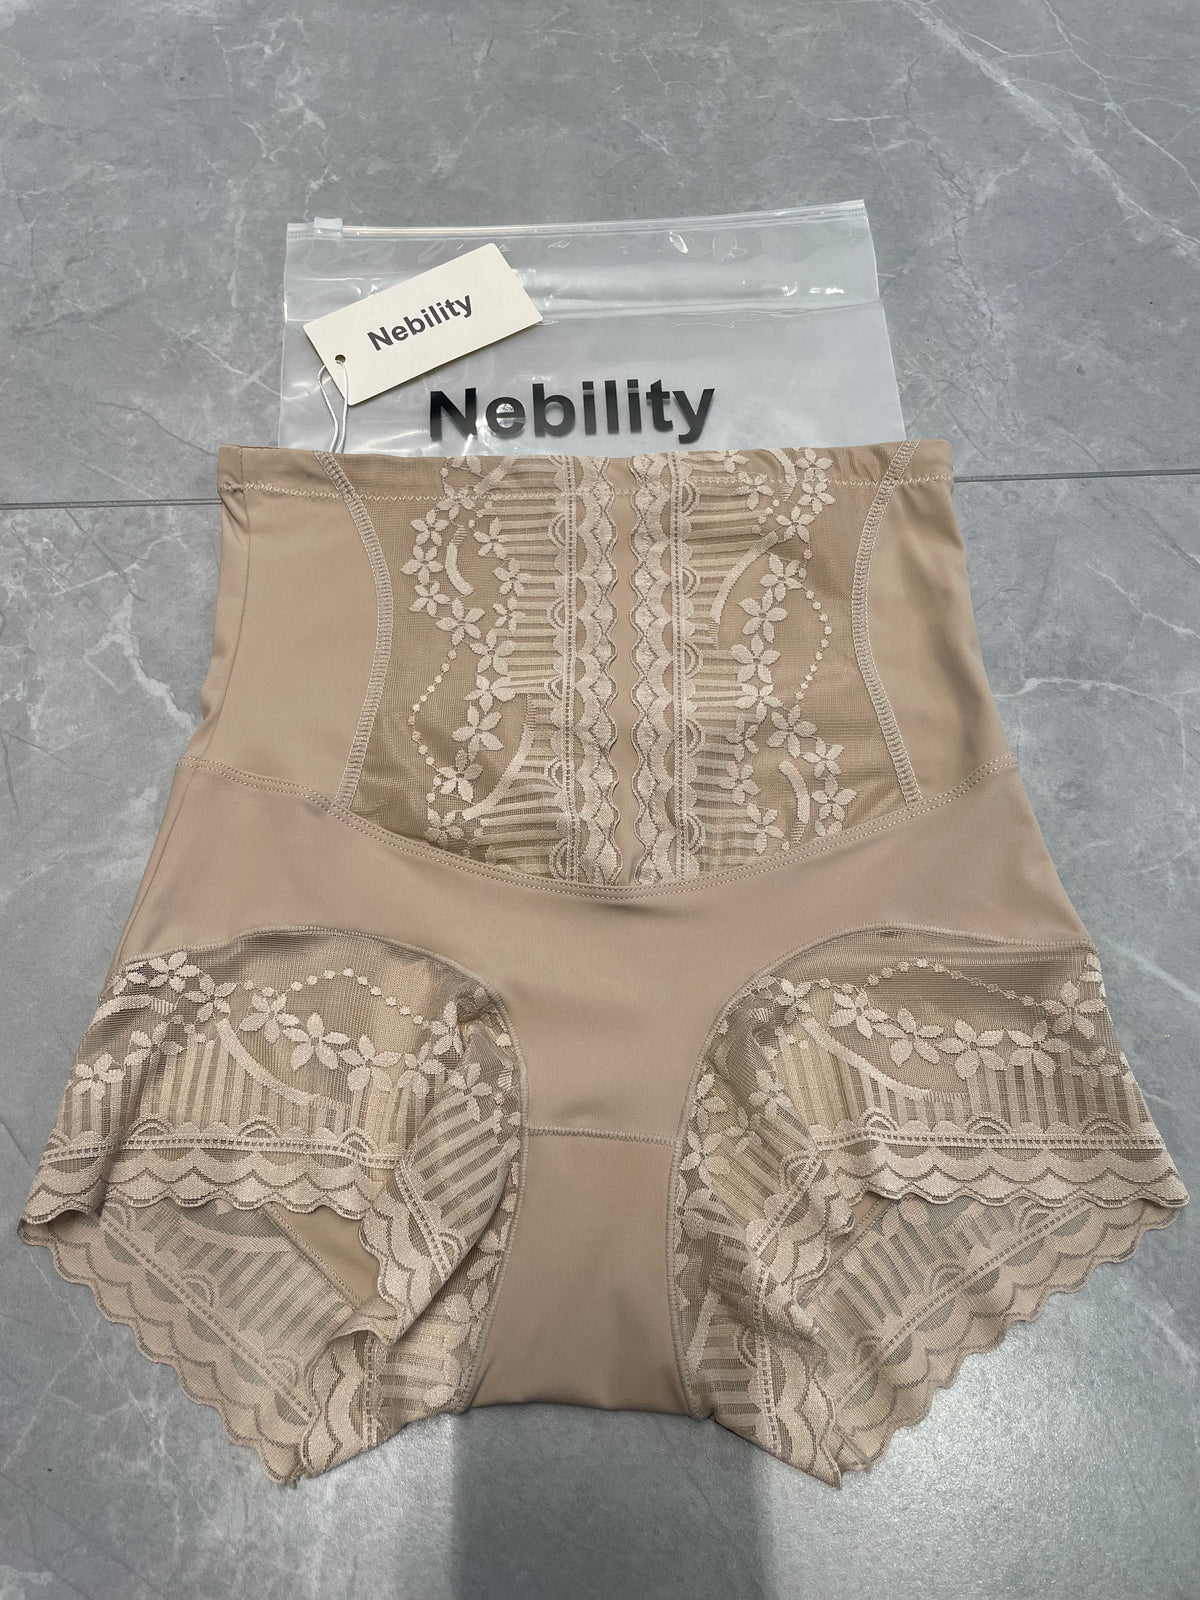 Nebility Women Lace Shorts High Waist Floral Lace Patchwork Panty Shorts Stretchy Lingerie Underwear